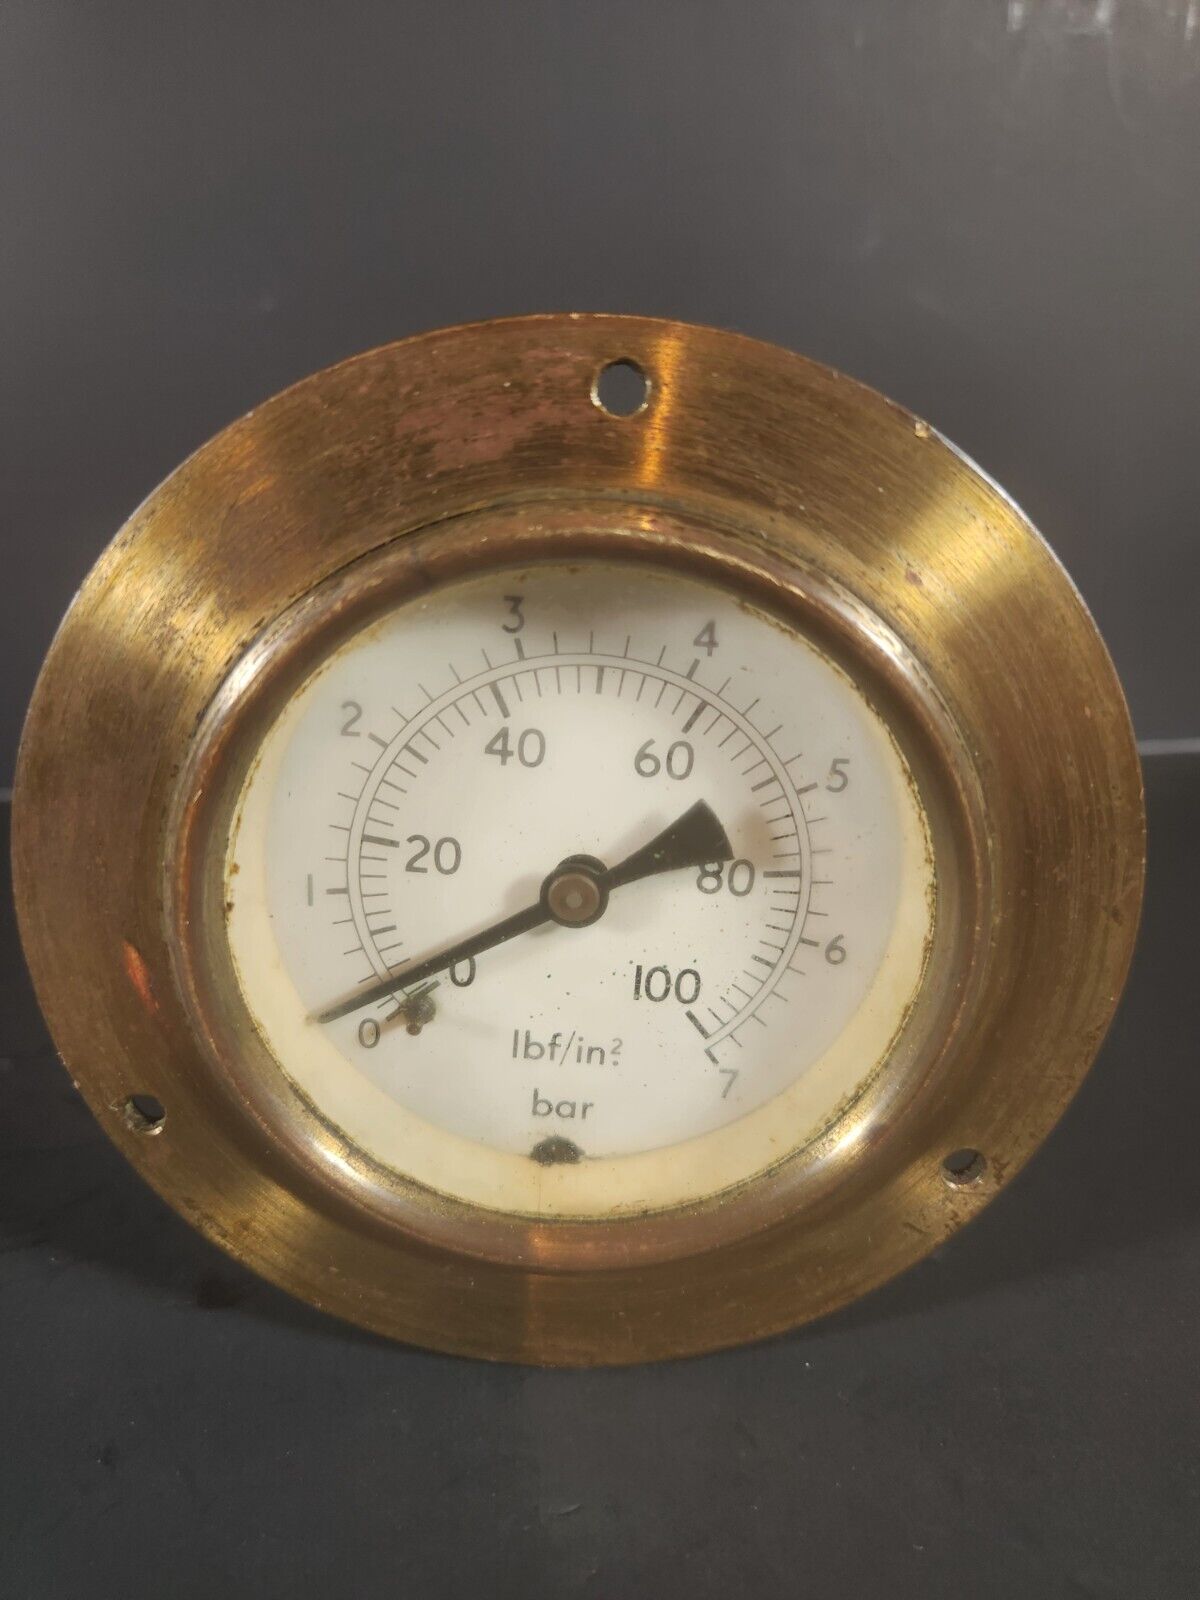 Vintage Brass Pressure Gauge 0-100 PSI